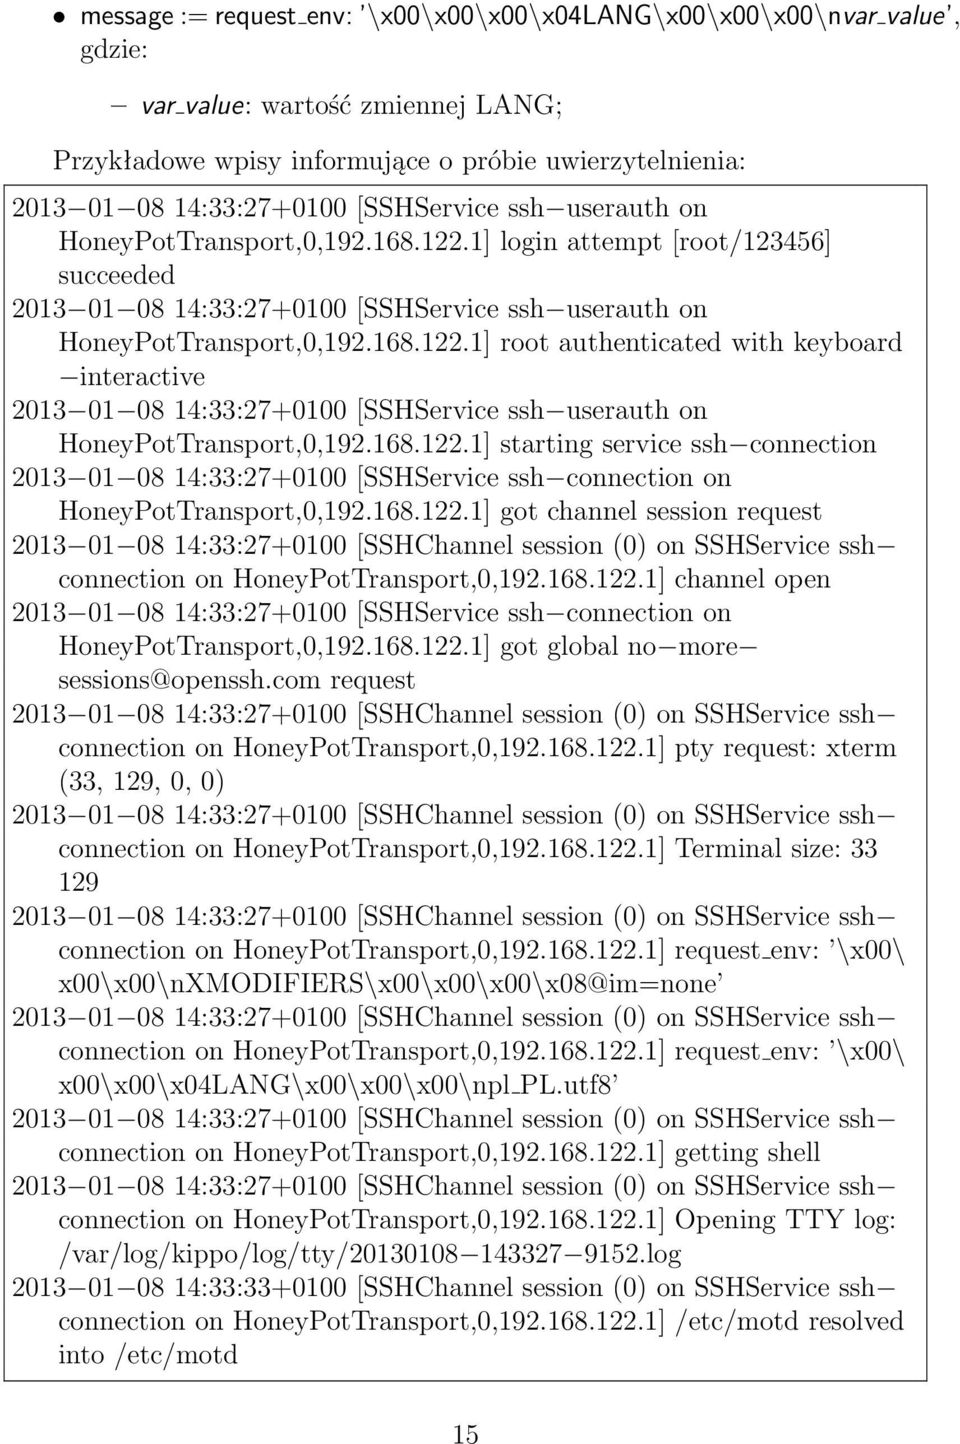 168.122.1] starting service ssh connection 2013 01 08 14:33:27+0100 [SSHService ssh connection on HoneyPotTransport,0,192.168.122.1] got channel session request 2013 01 08 14:33:27+0100 [SSHChannel session (0) on SSHService ssh connection on HoneyPotTransport,0,192.